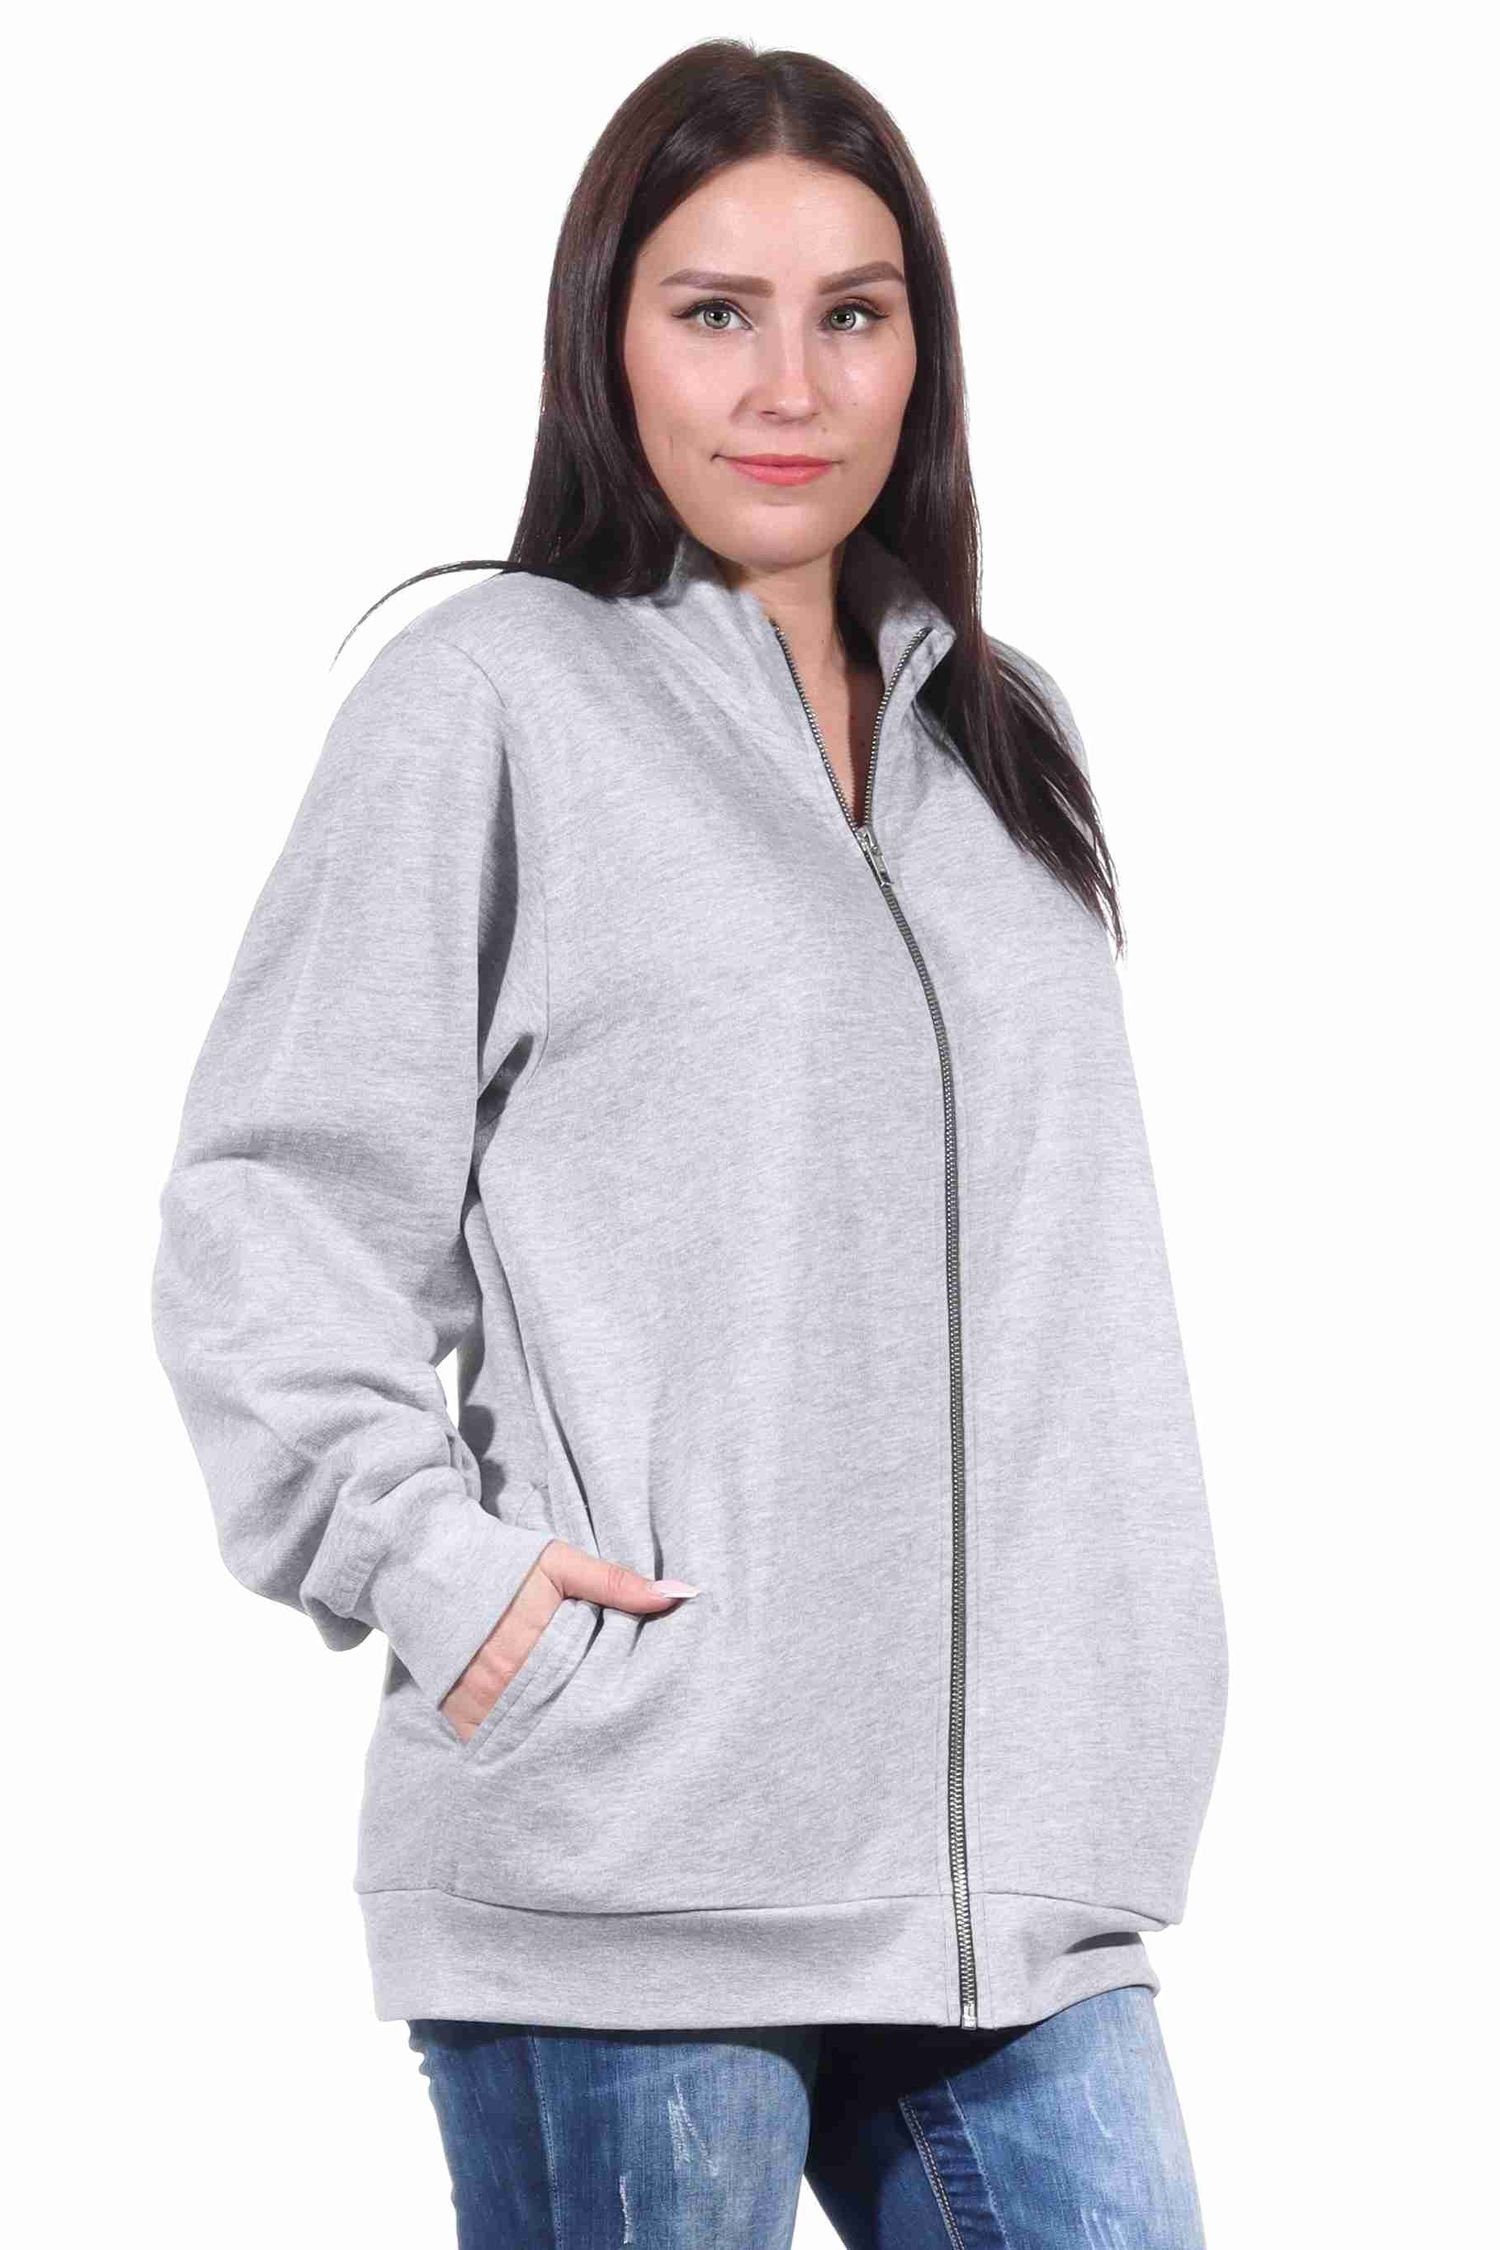 Normann Relaxanzug Damen Jacke für Hausanzug, Sportanzug oder Jogginanzug Oberteil grau